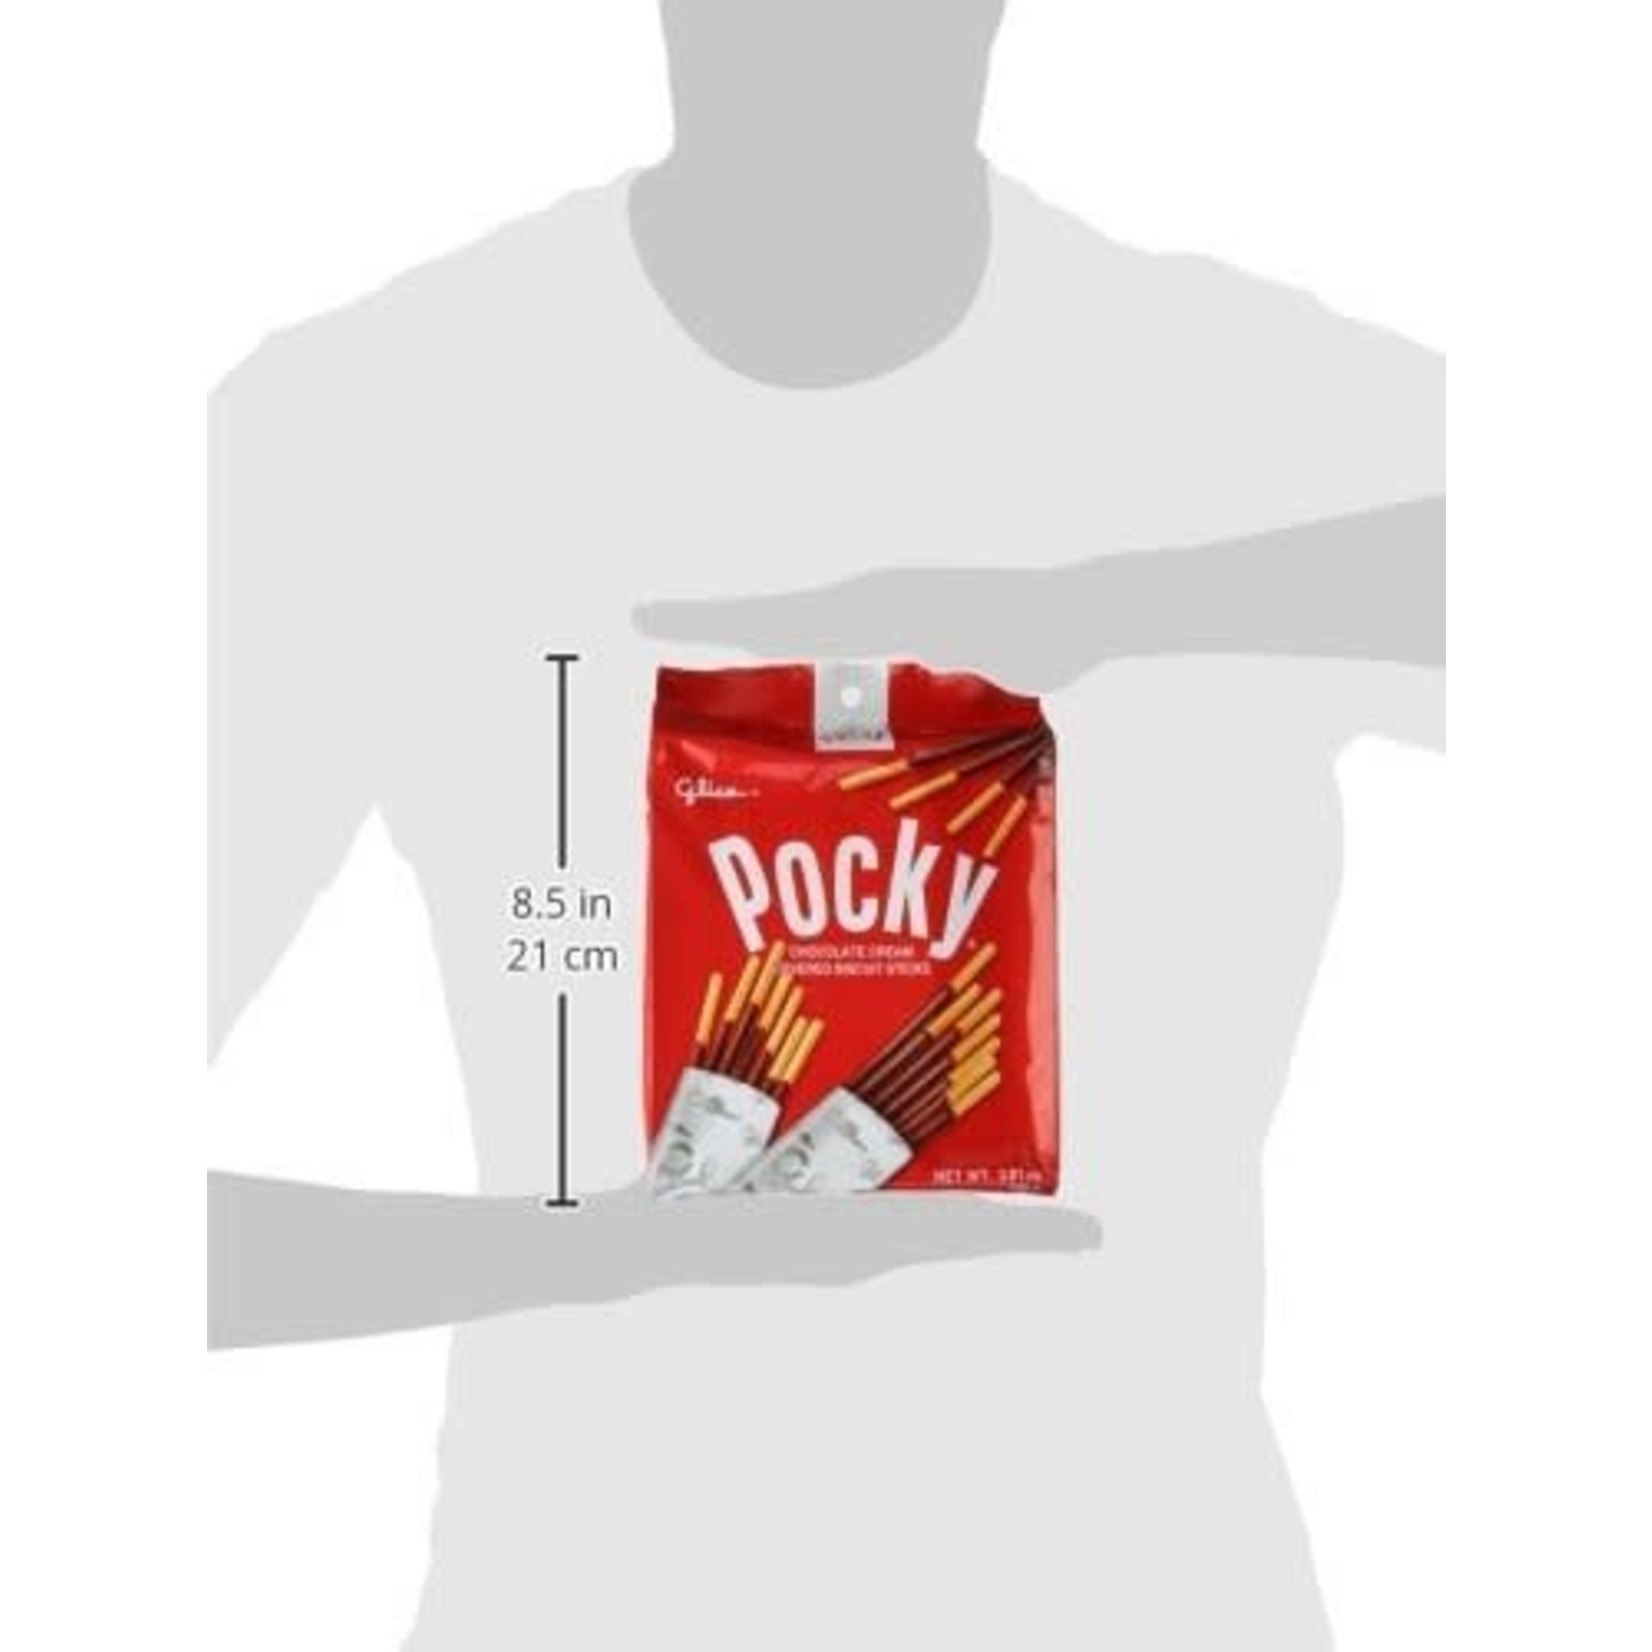 Glico Pocky - Original Chocolate 4.13oz Family Pack